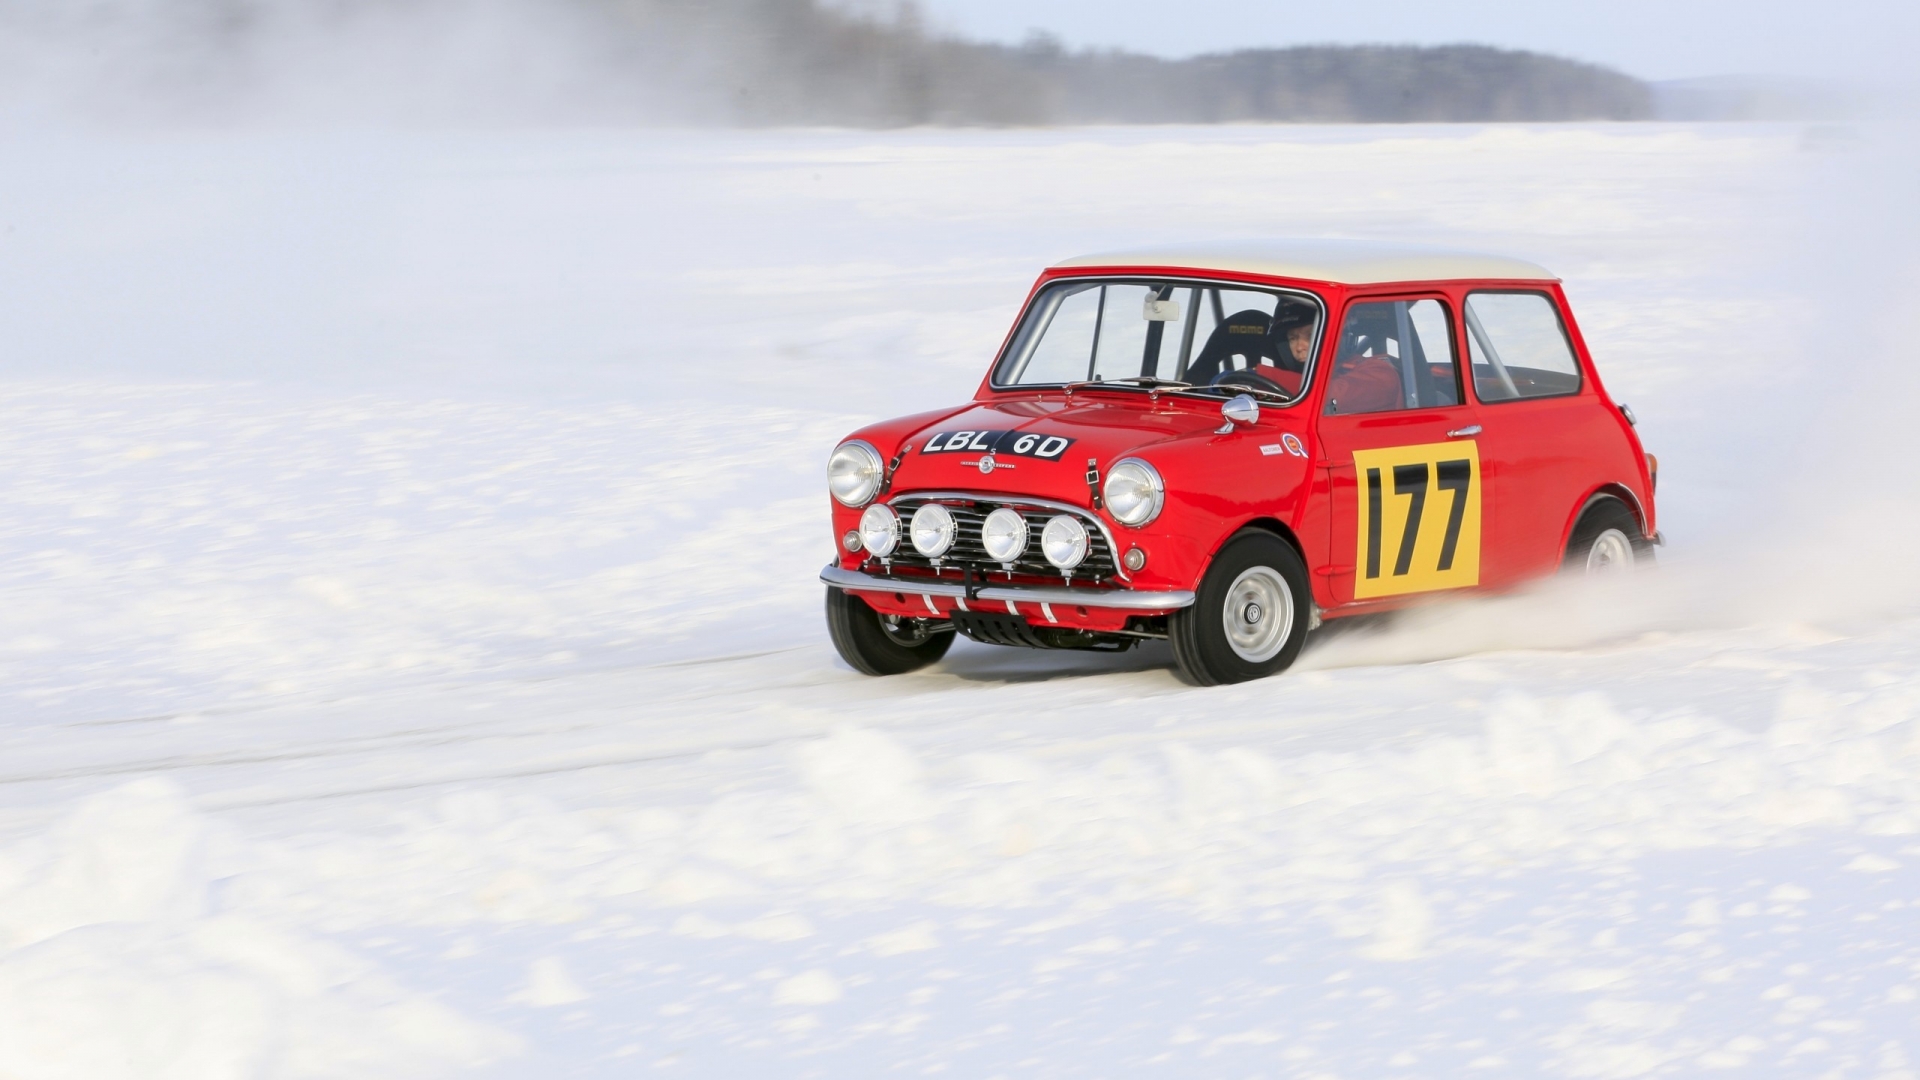 Mini Snow Race for 1920 x 1080 HDTV 1080p resolution